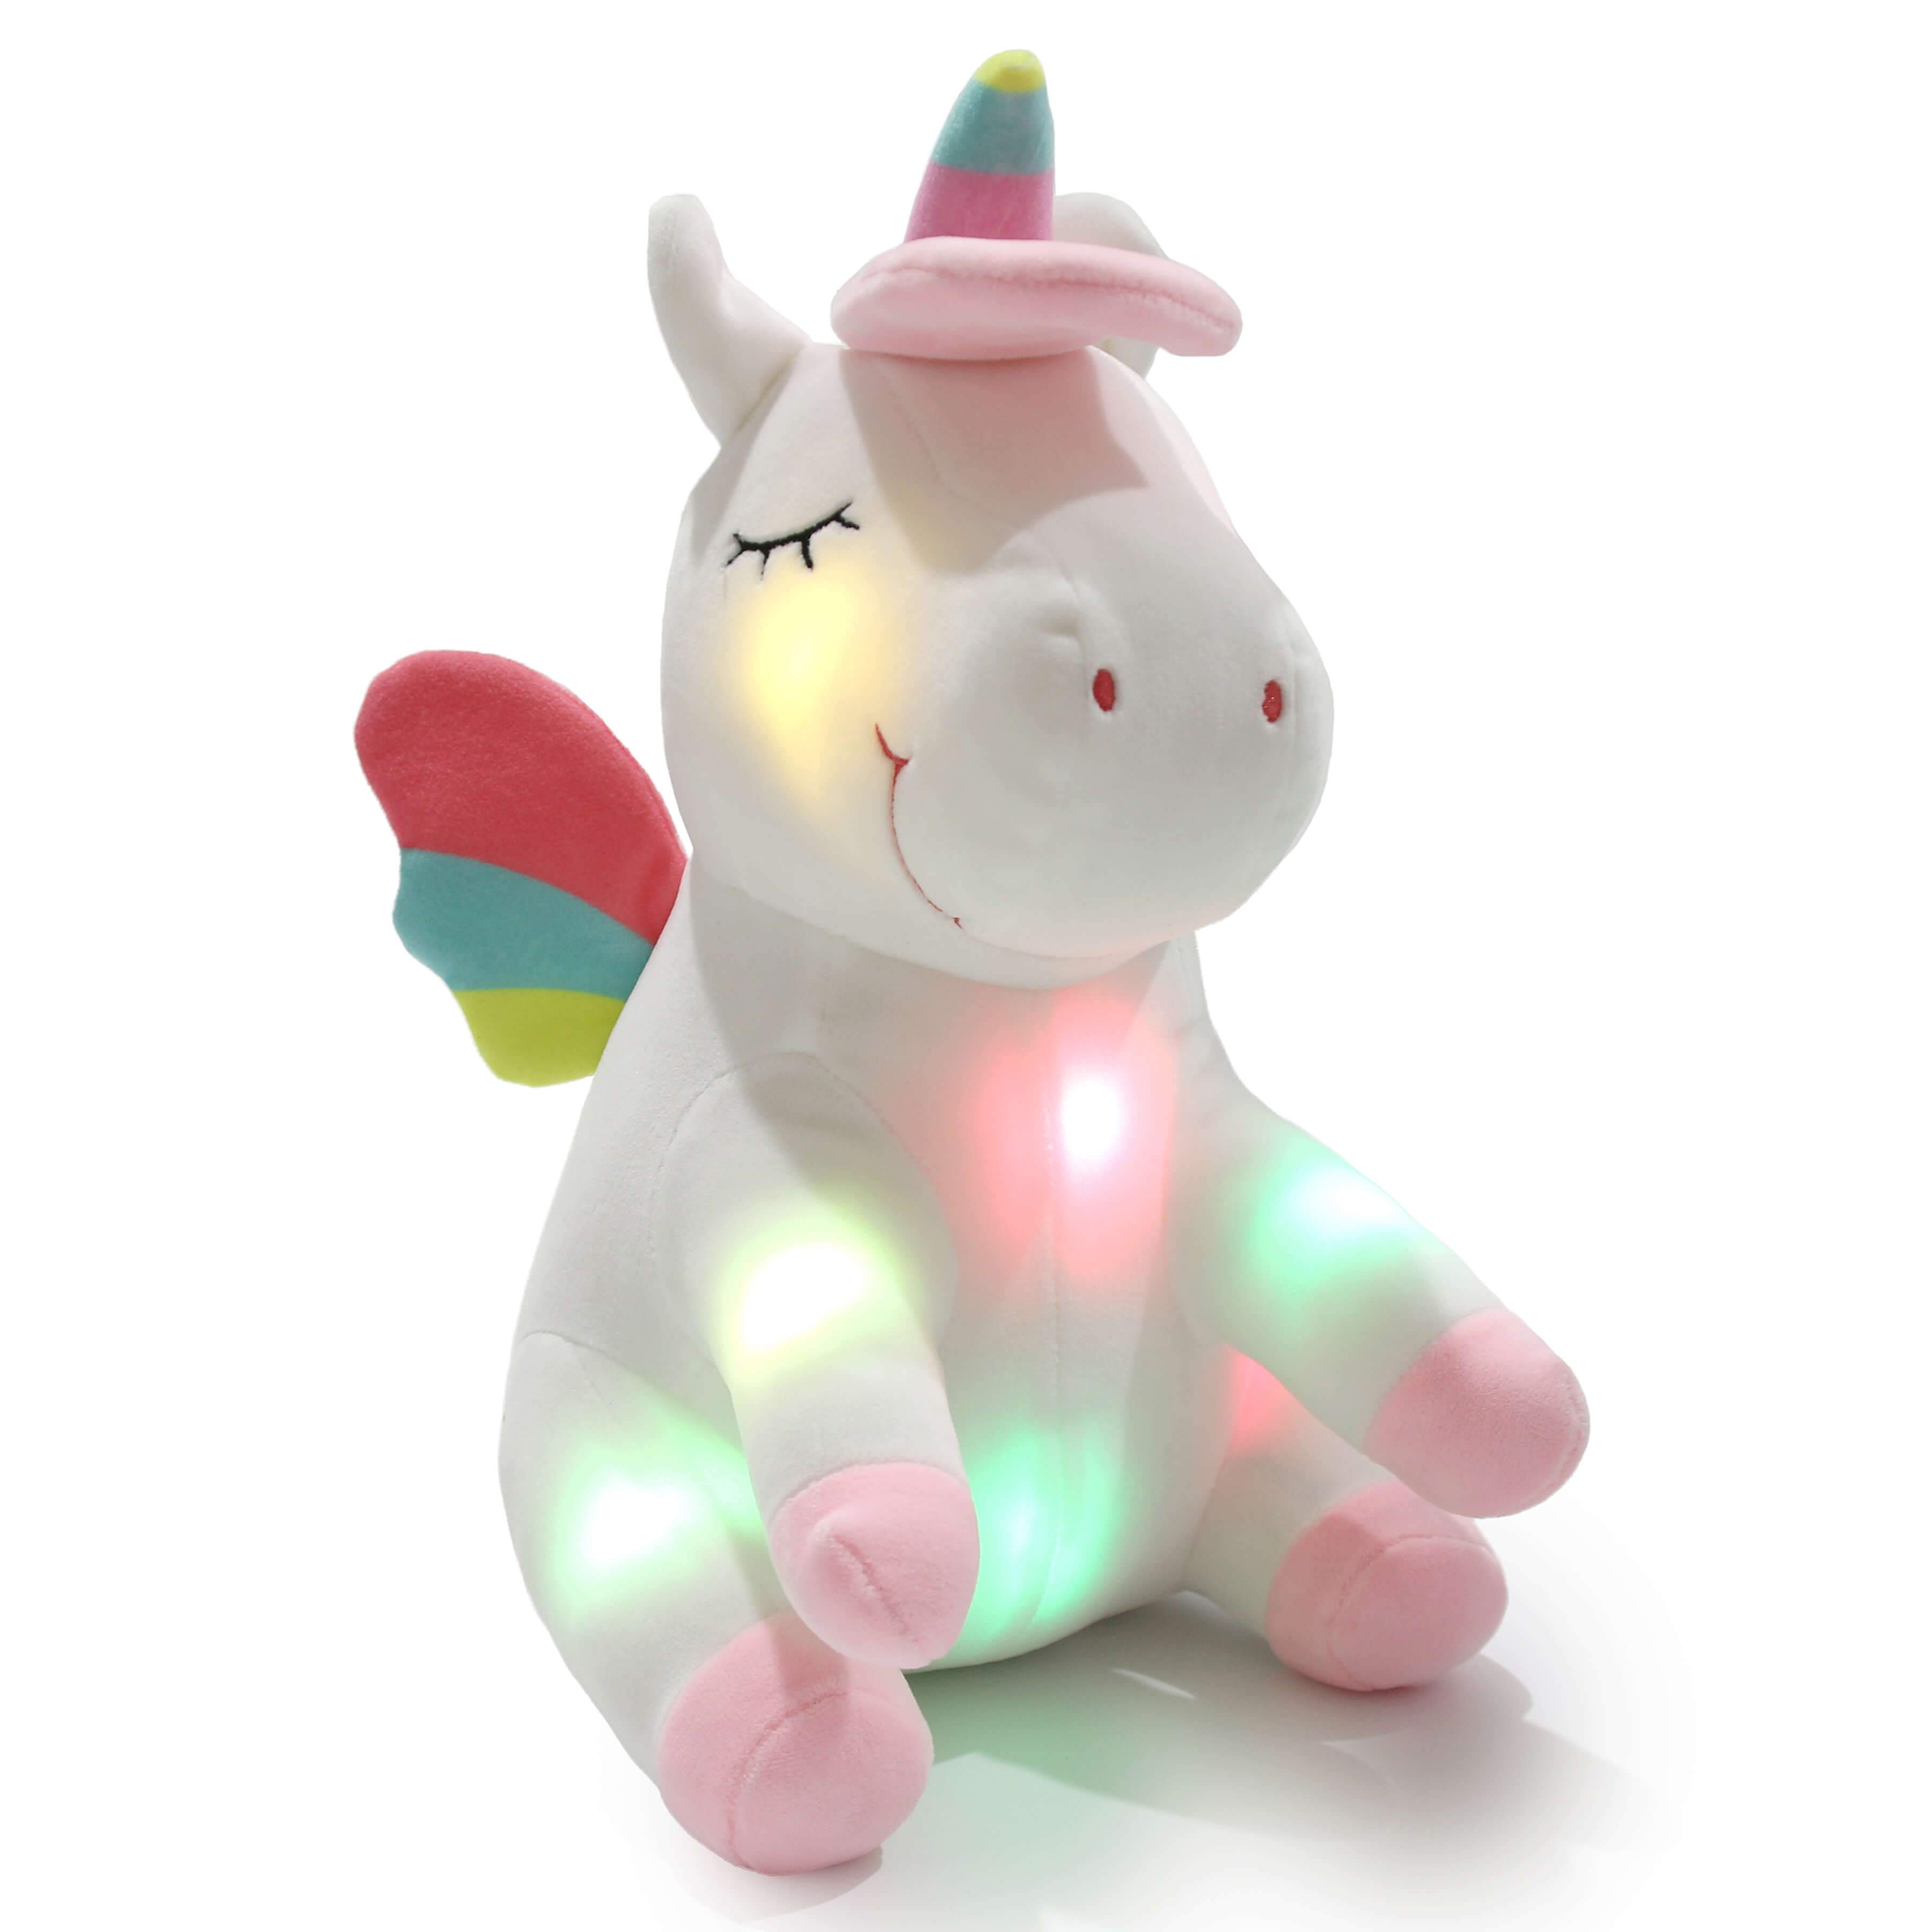 Light up Stuffed Unicorn Plush Toy with LED Night Lights Gifts for Toddler Kids | Athoinsu - Glow Guards